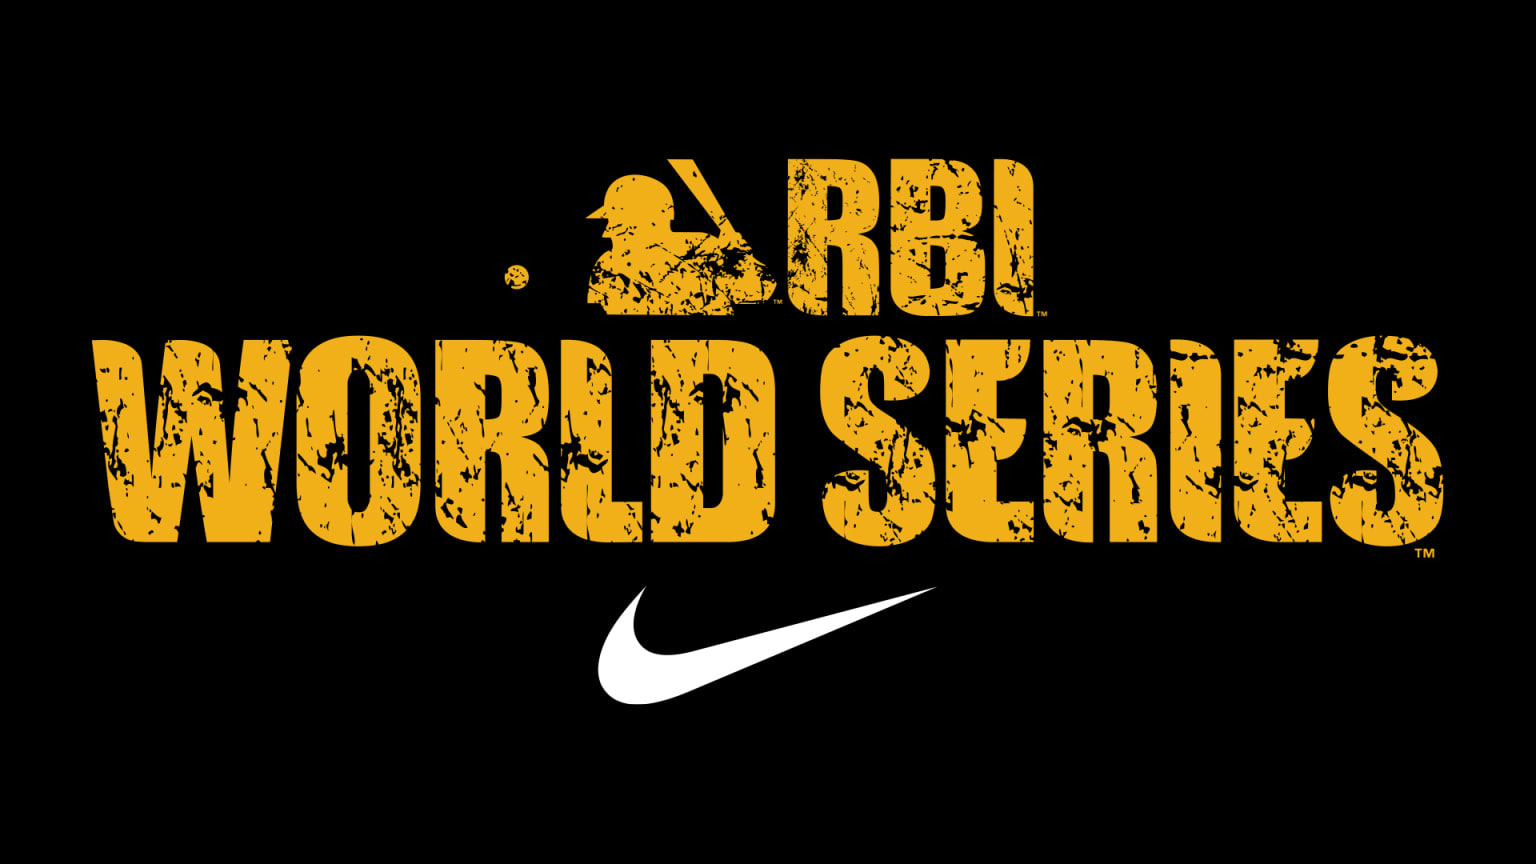 Logo Nike Chicago Cubs Vs St Louis Cardinals 2023 Mlb World Tour